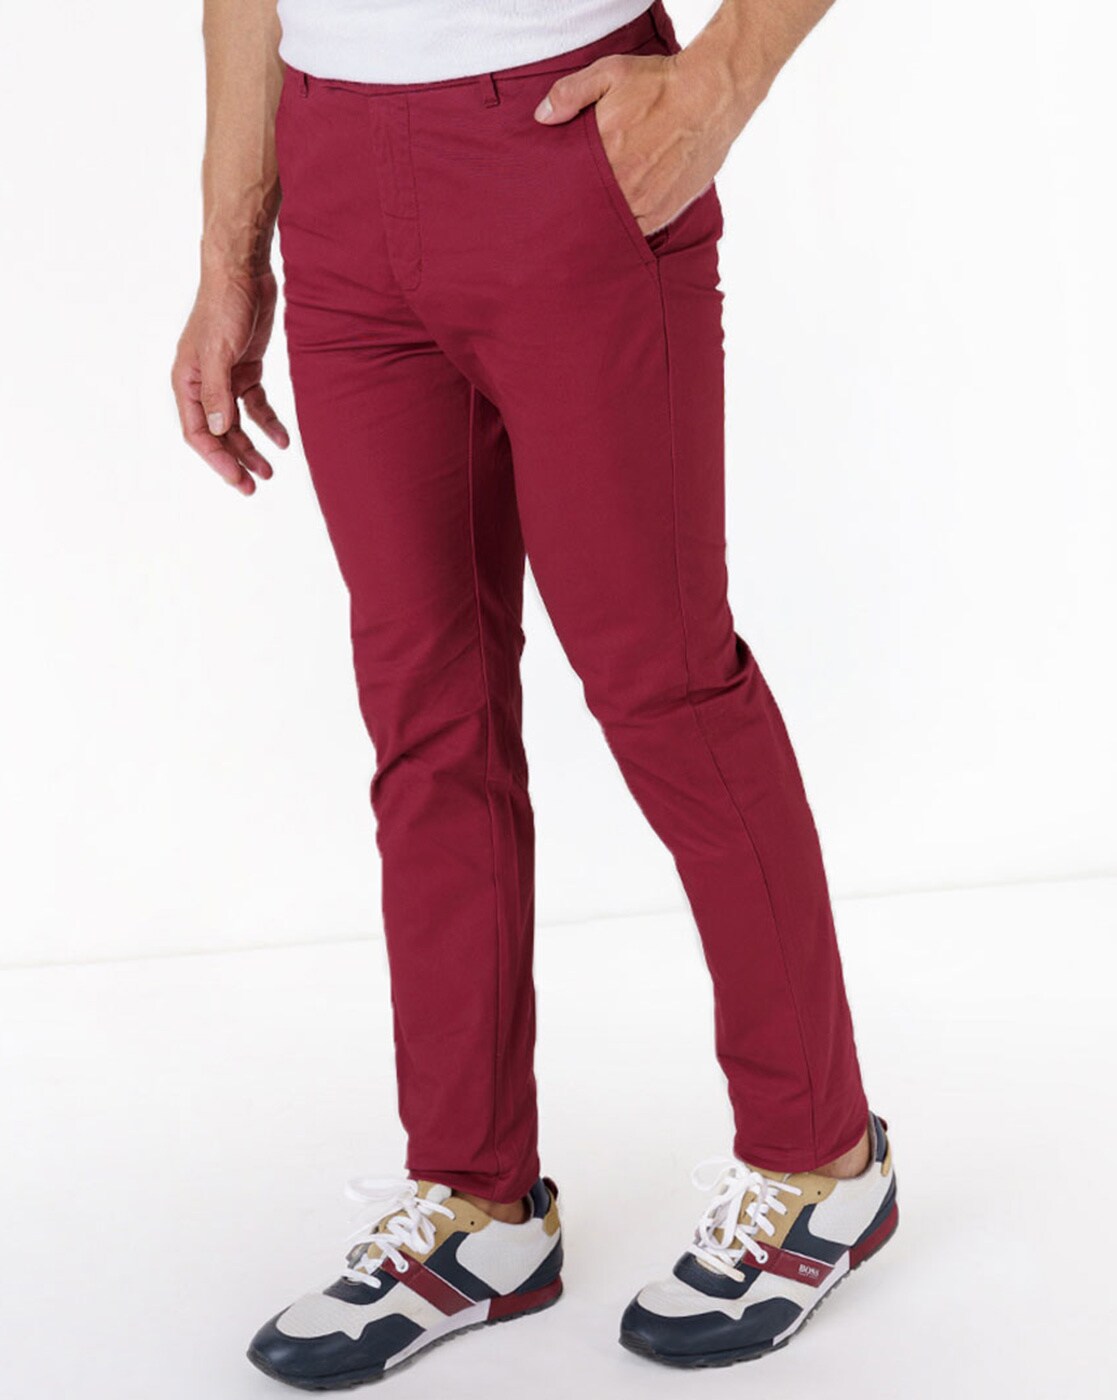 Tommy Hilfiger Custom Fit Chino Pants, $59 | Macy's | Lookastic